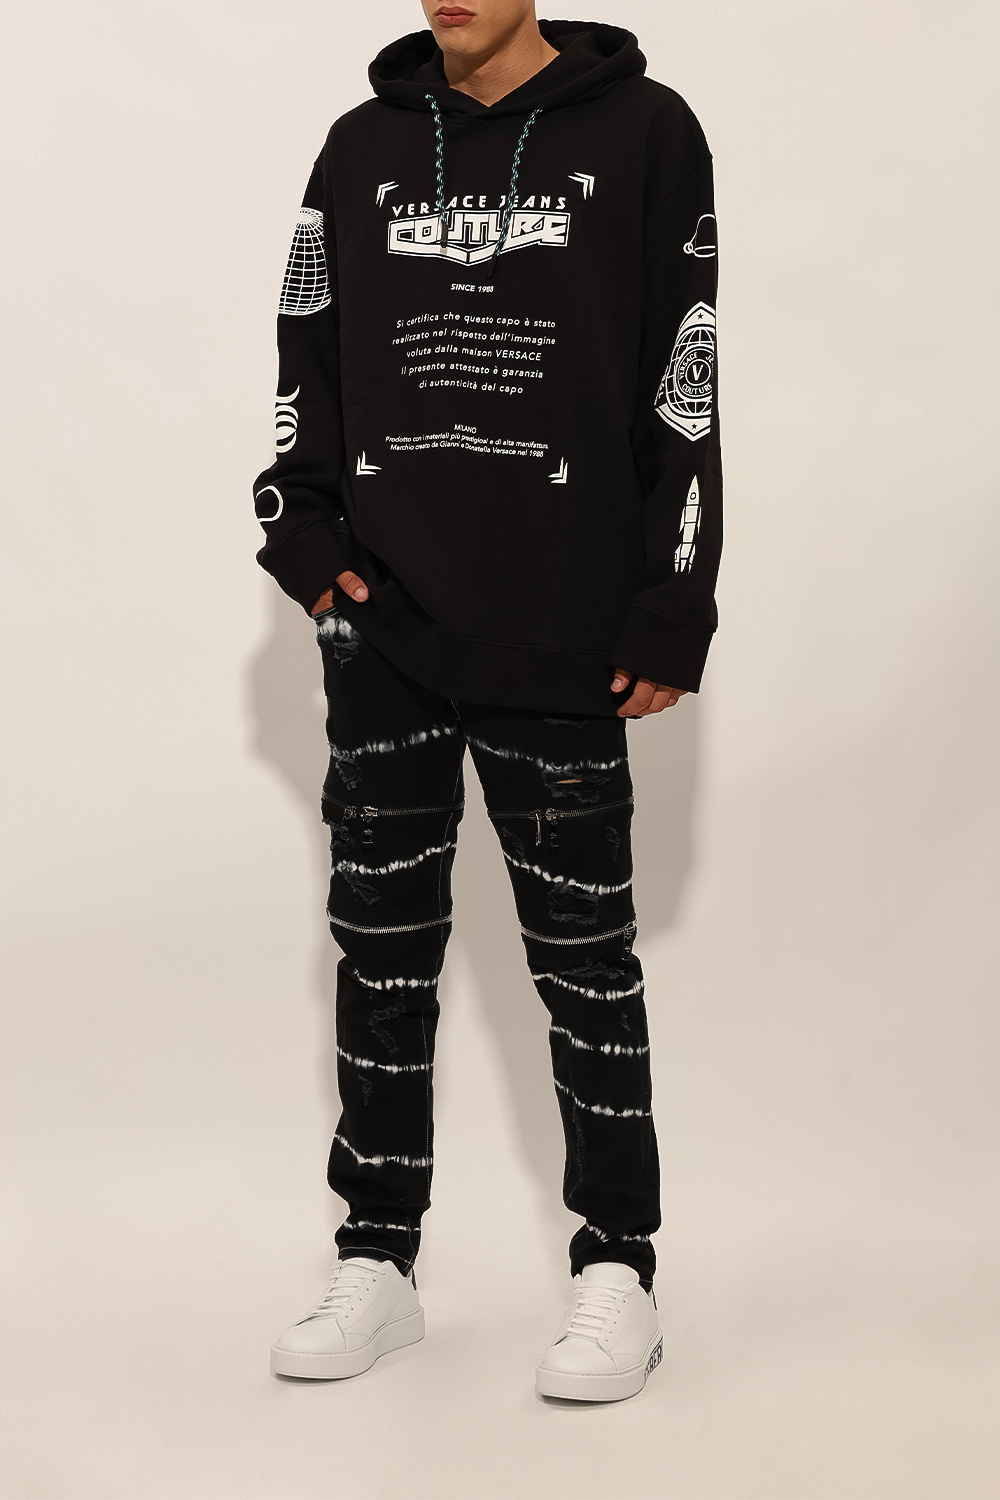 Versace Jeans Couture Printed Ras hoodie